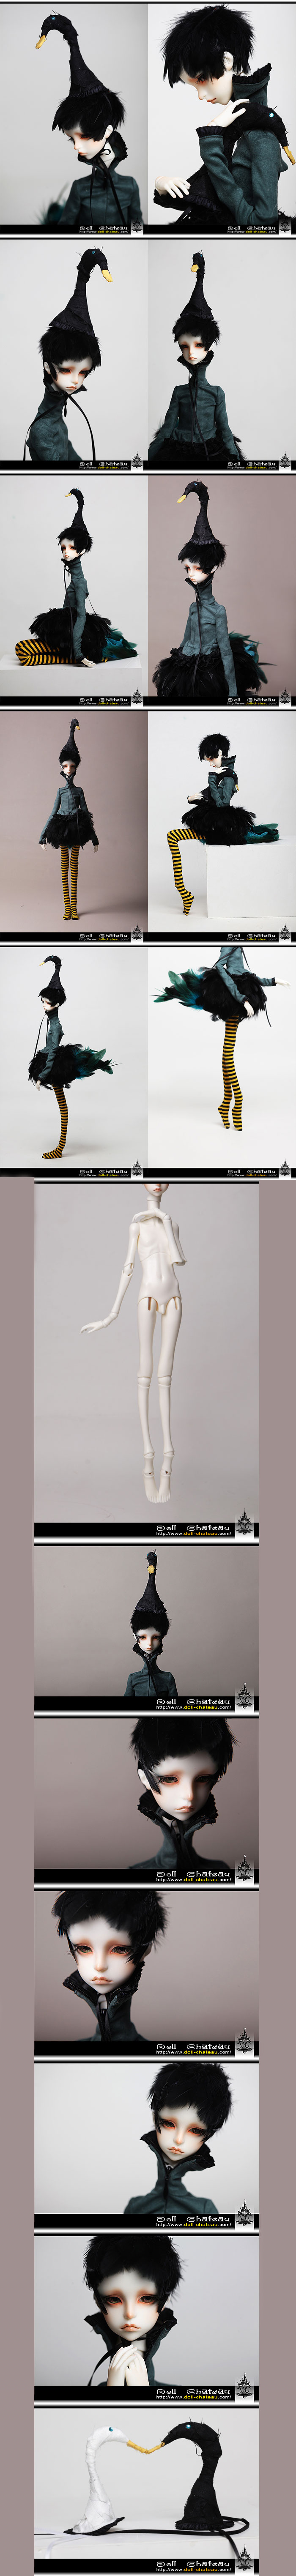 BJD Douglas Boy 50cm Boll-jointed doll